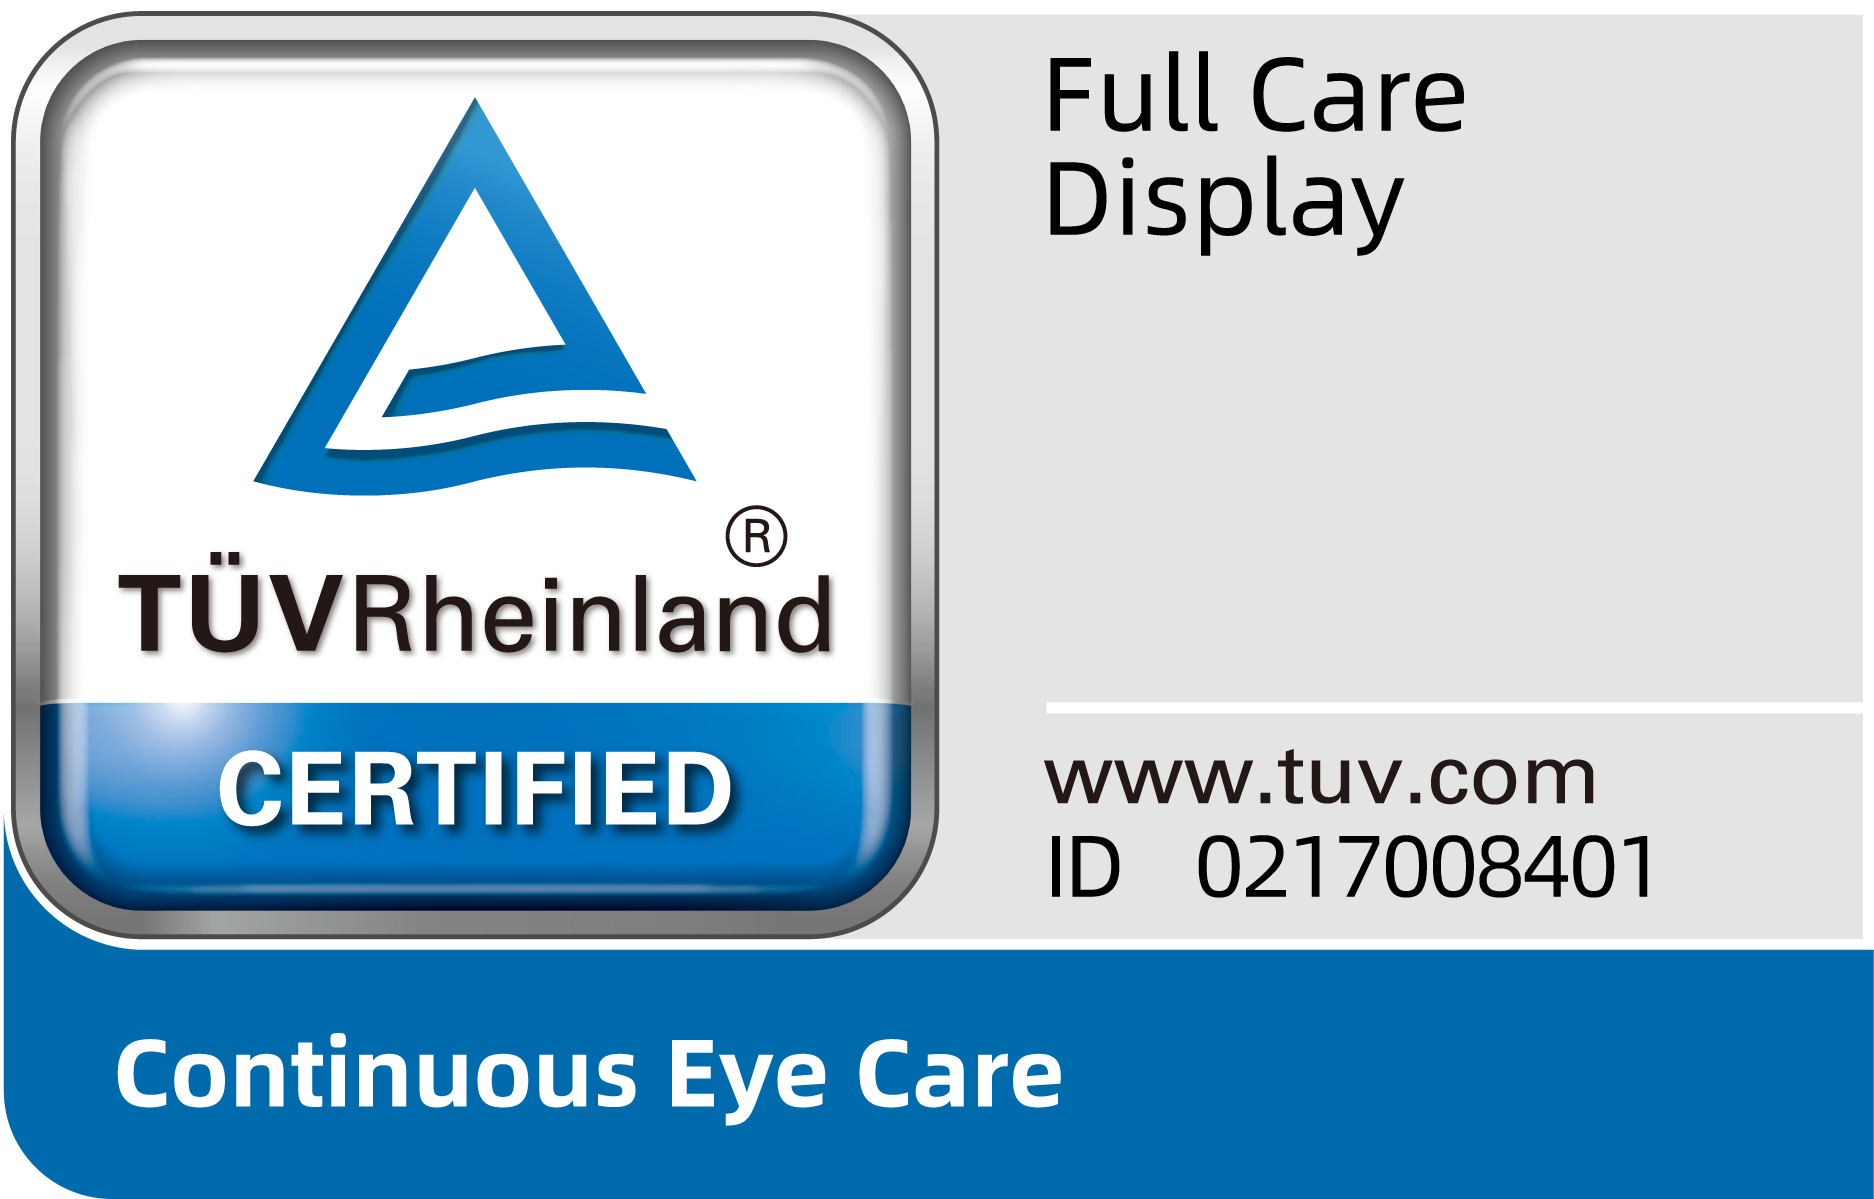 Certifikace TÜV Rheinland Full Care Display. 1